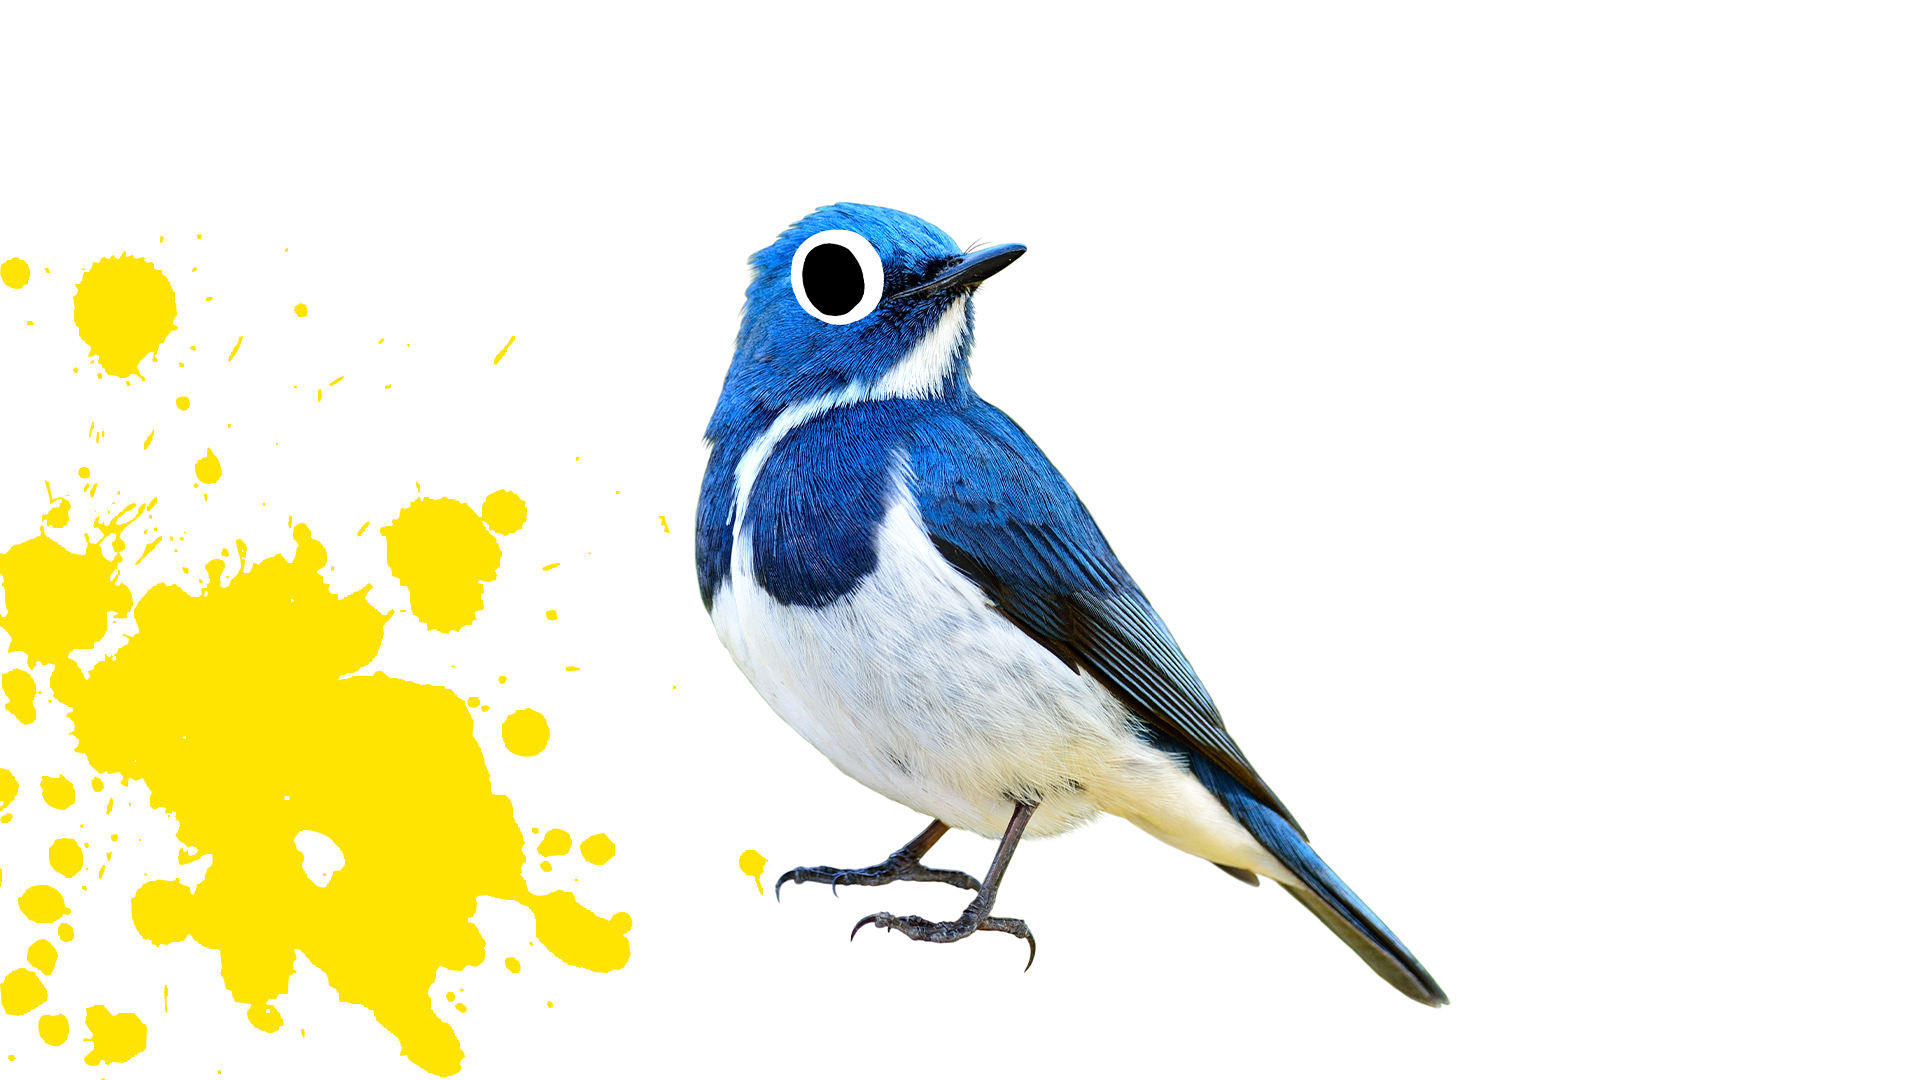 Blue bird with yellow splat